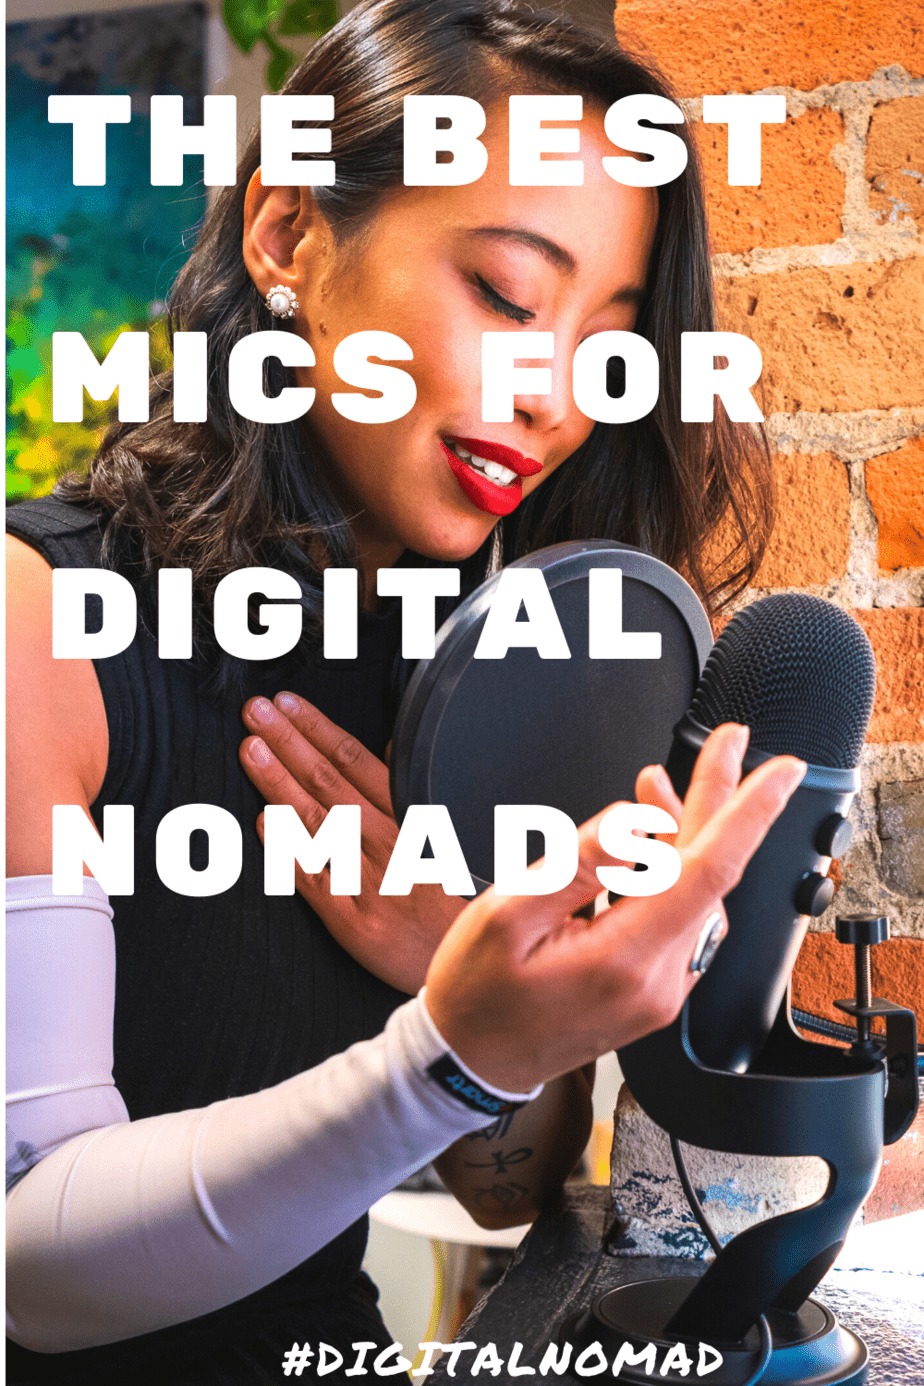 5 best noise-canceling microphone for Digital Nomads